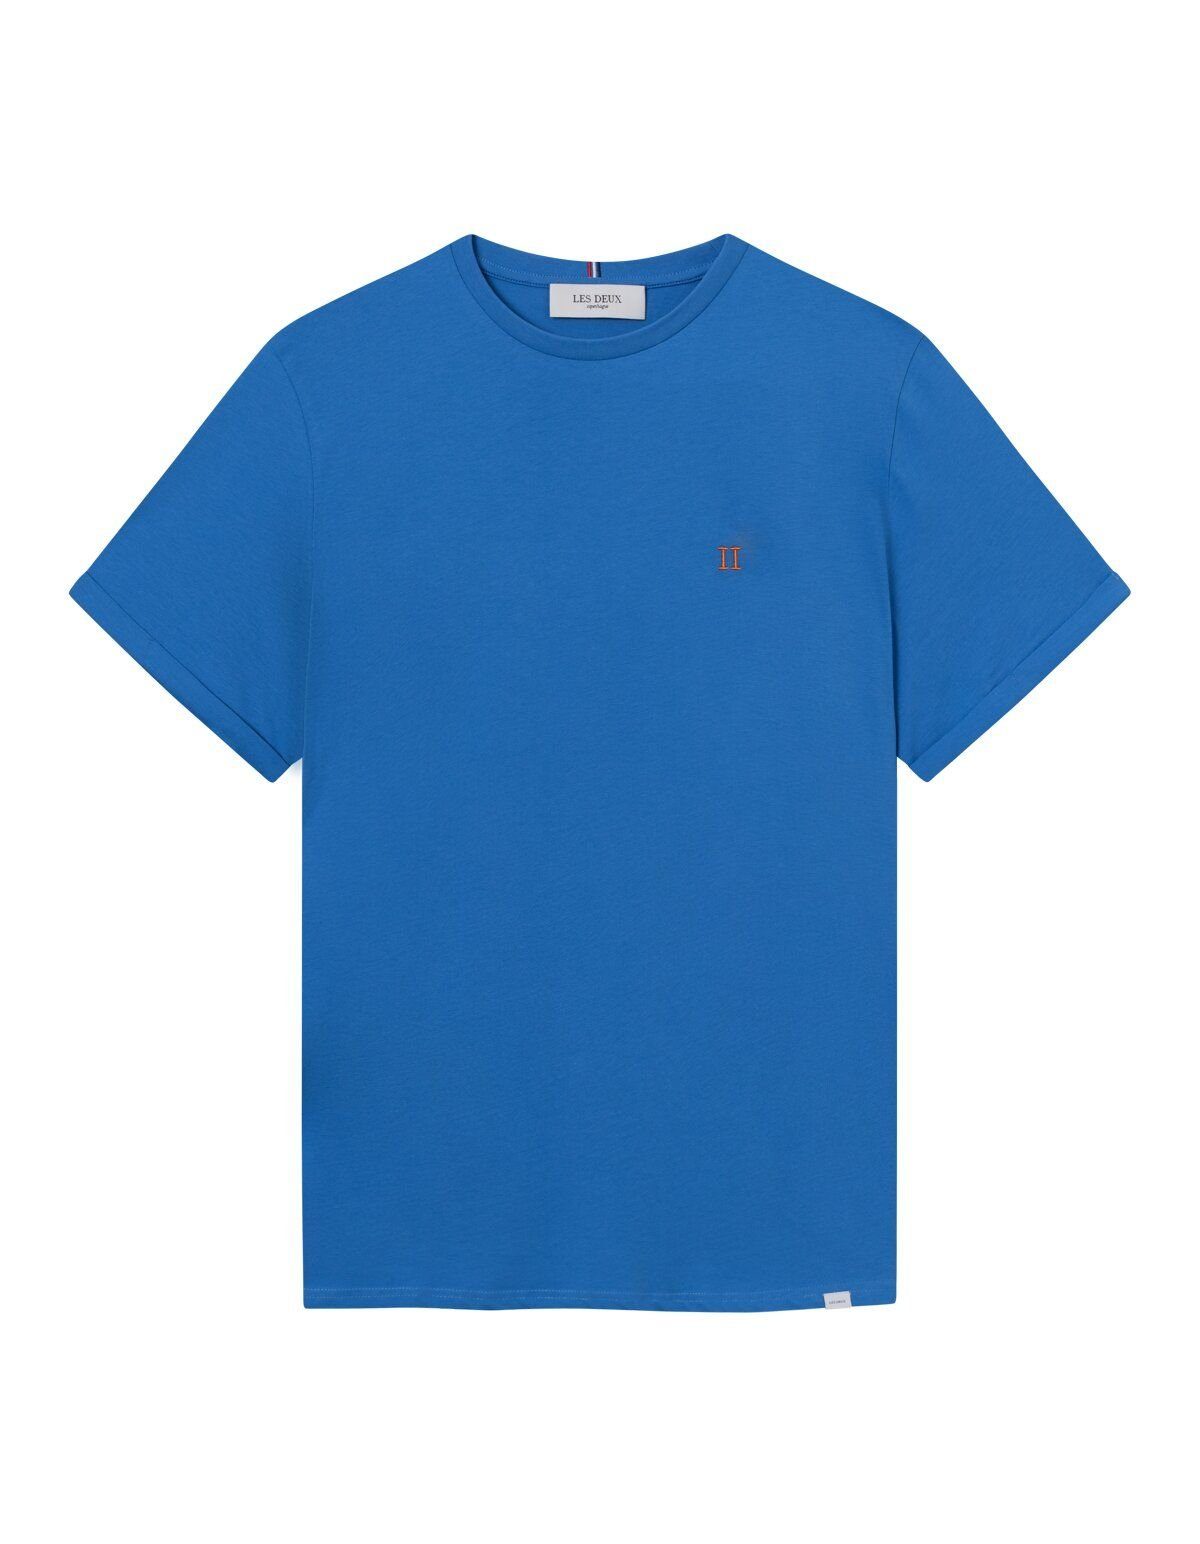 Les atmungsaktiv Deux T-Shirt reine Blue/o Bauumwolle, 471730-Palace